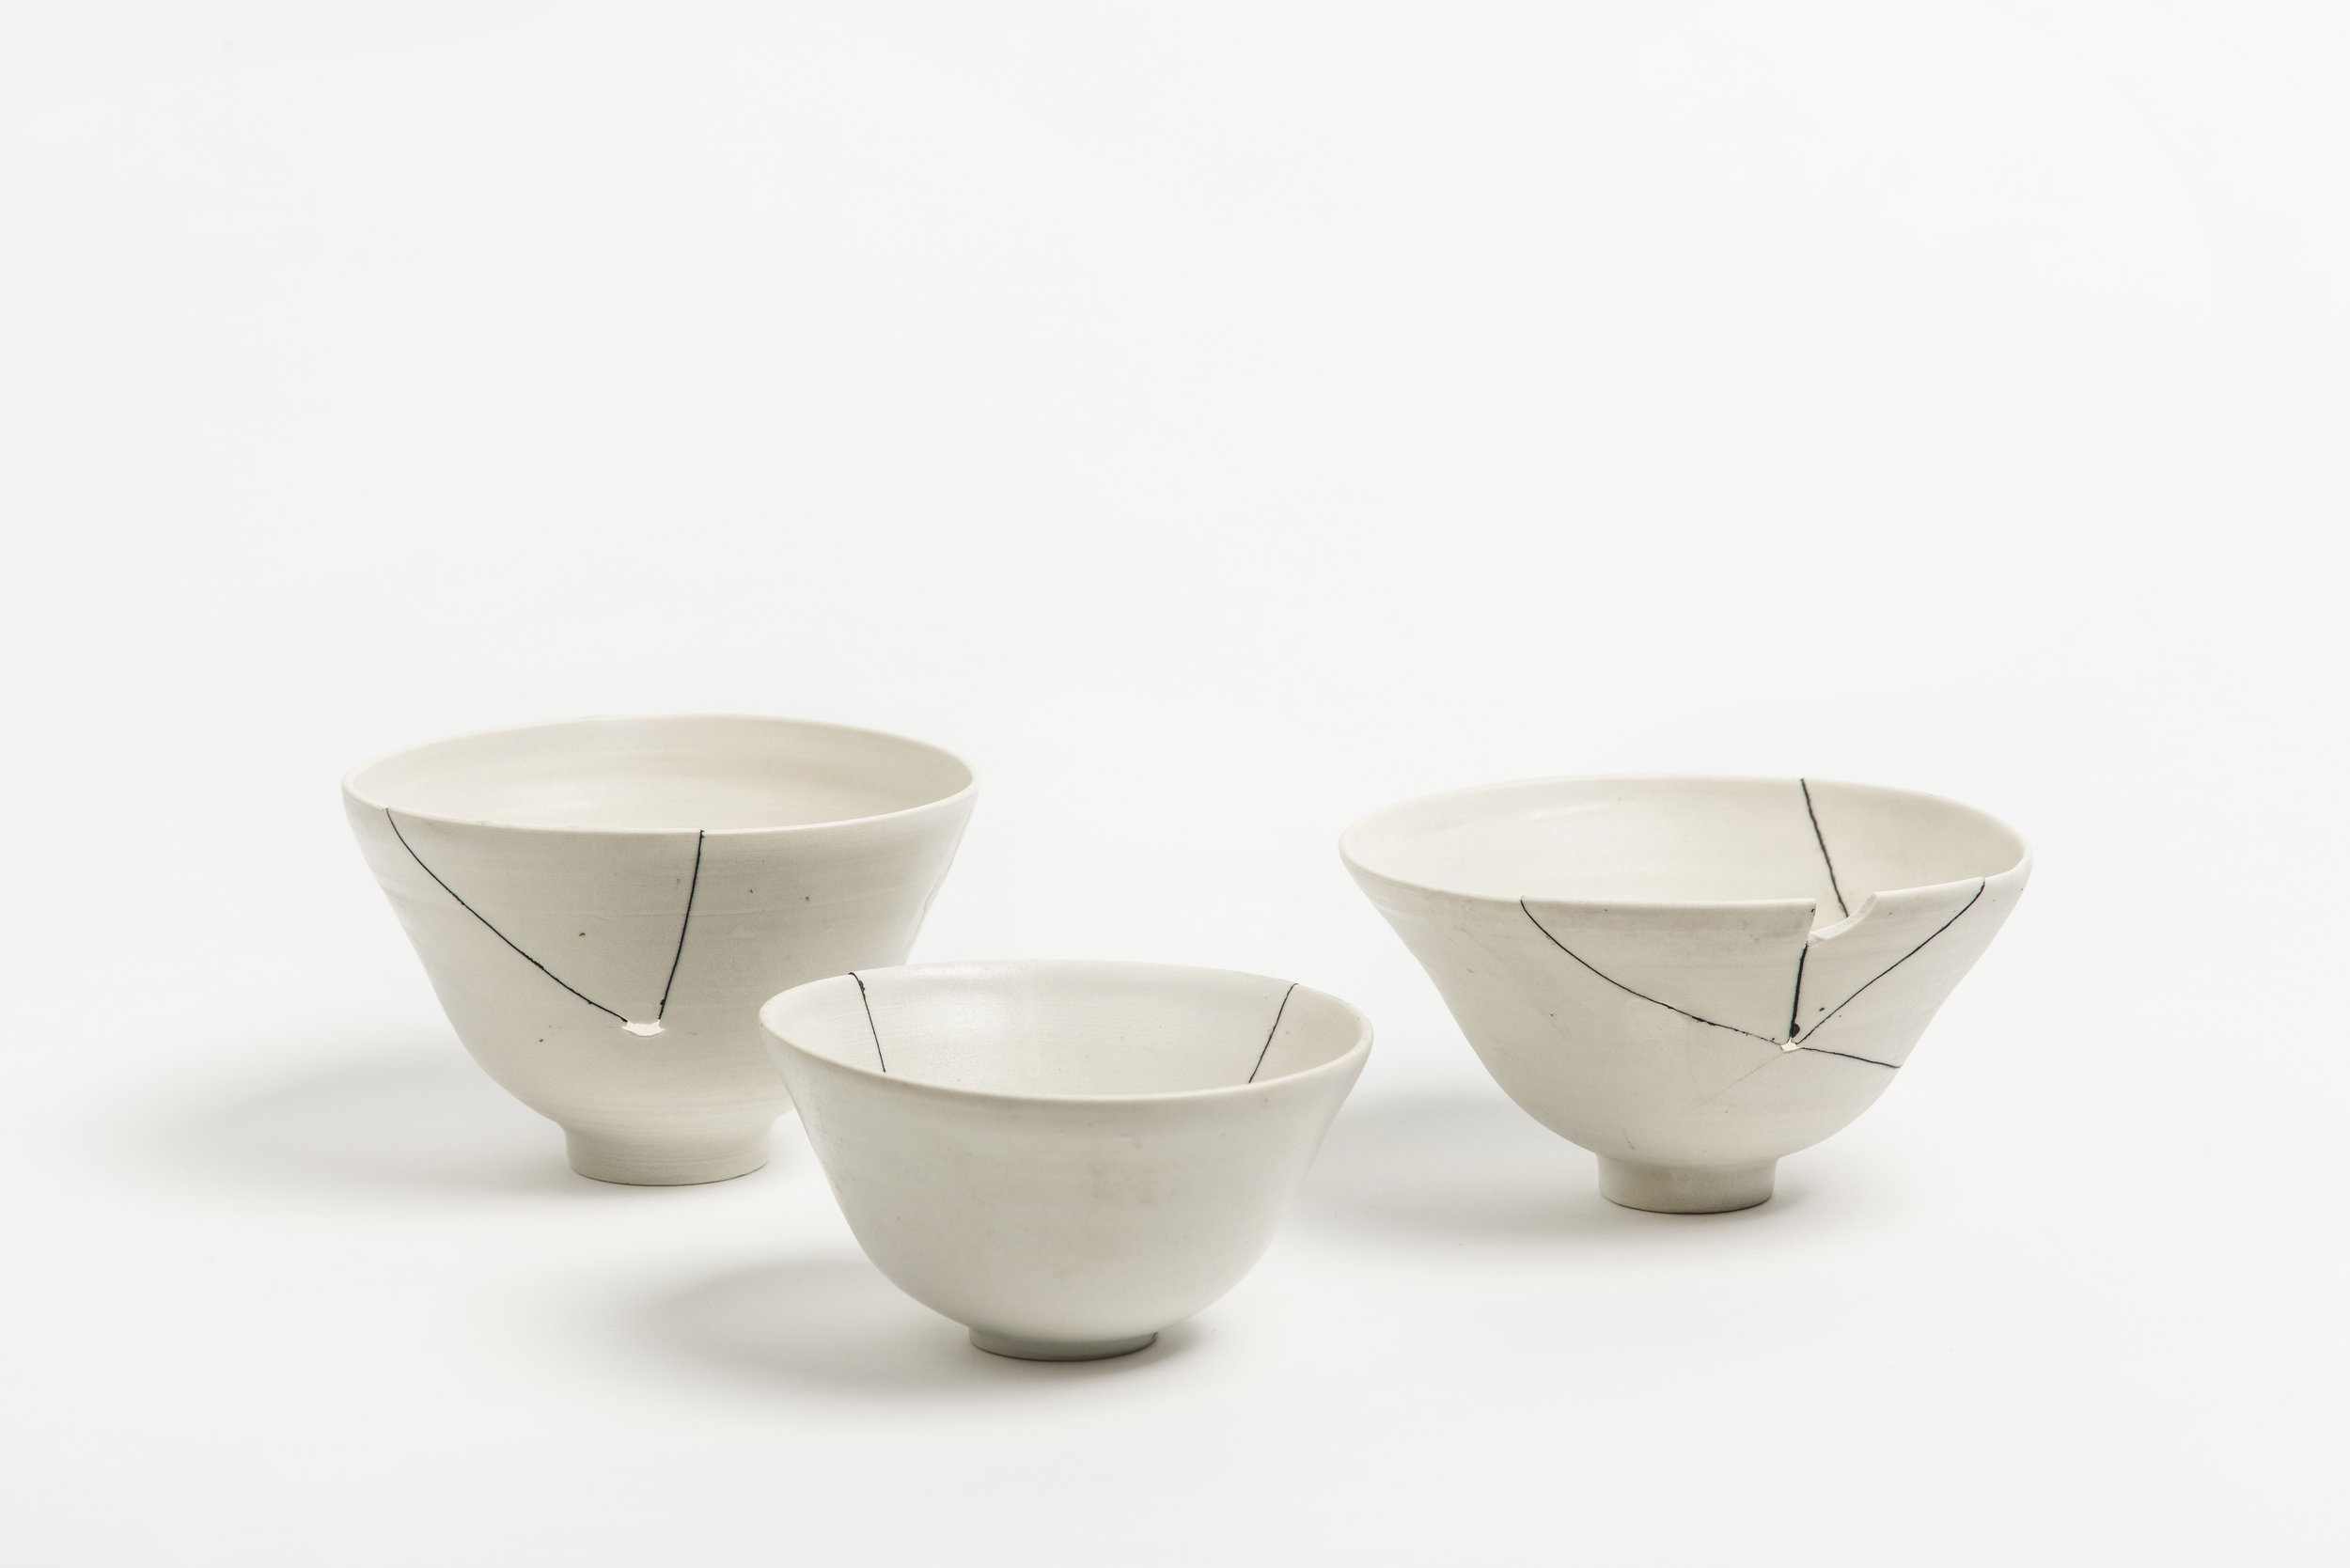 fractures-series-bowl-romy-northover-ceramics-the-garnered-80.jpg